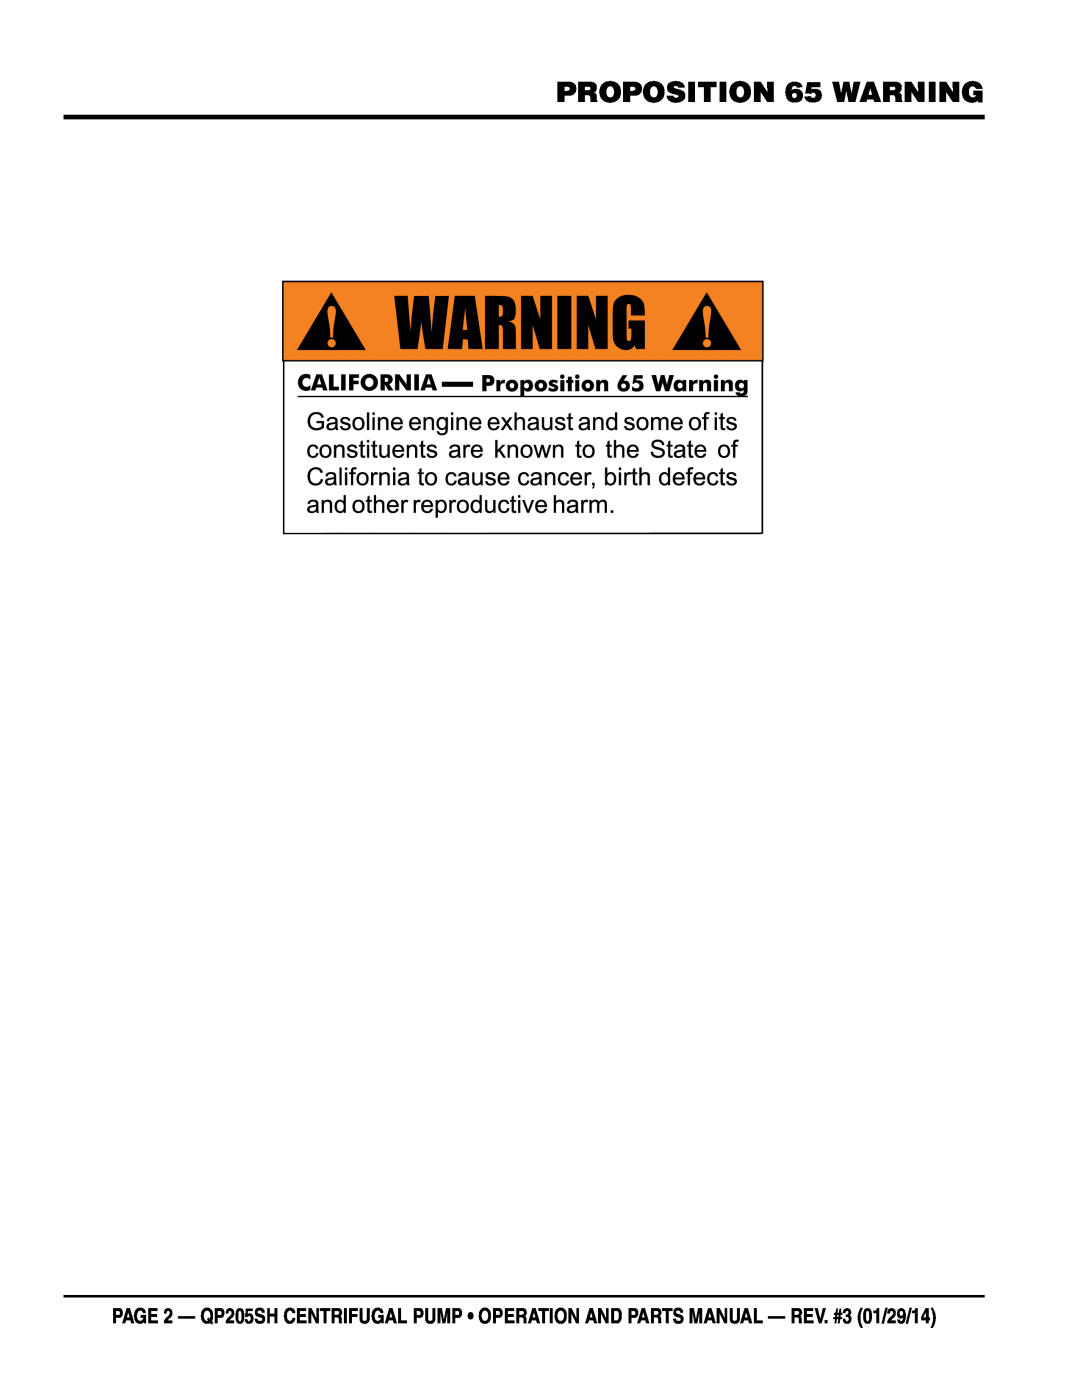 Honda Power Equipment QP205SH manual PROPOSITION 65 WARNING 